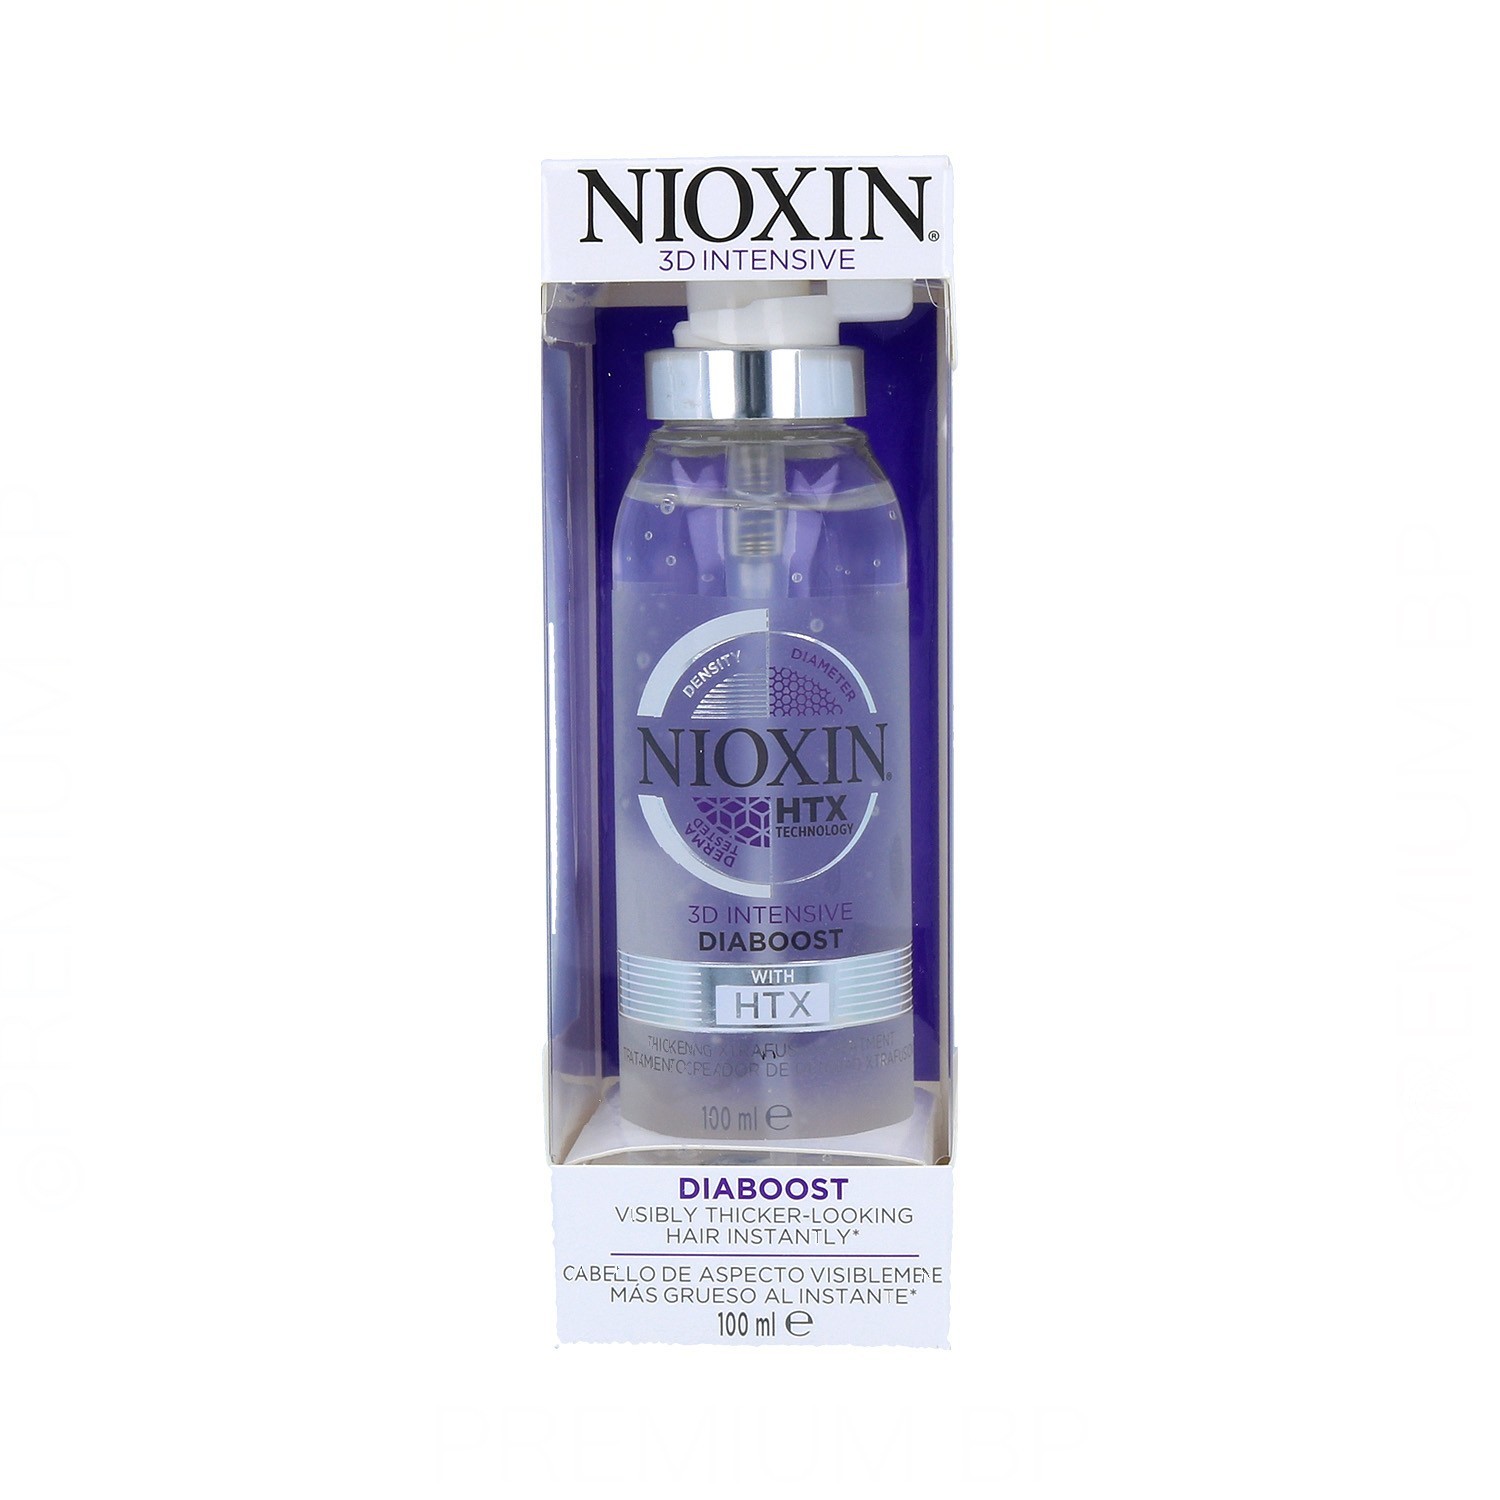 Nioxin Diaboost 100 ml